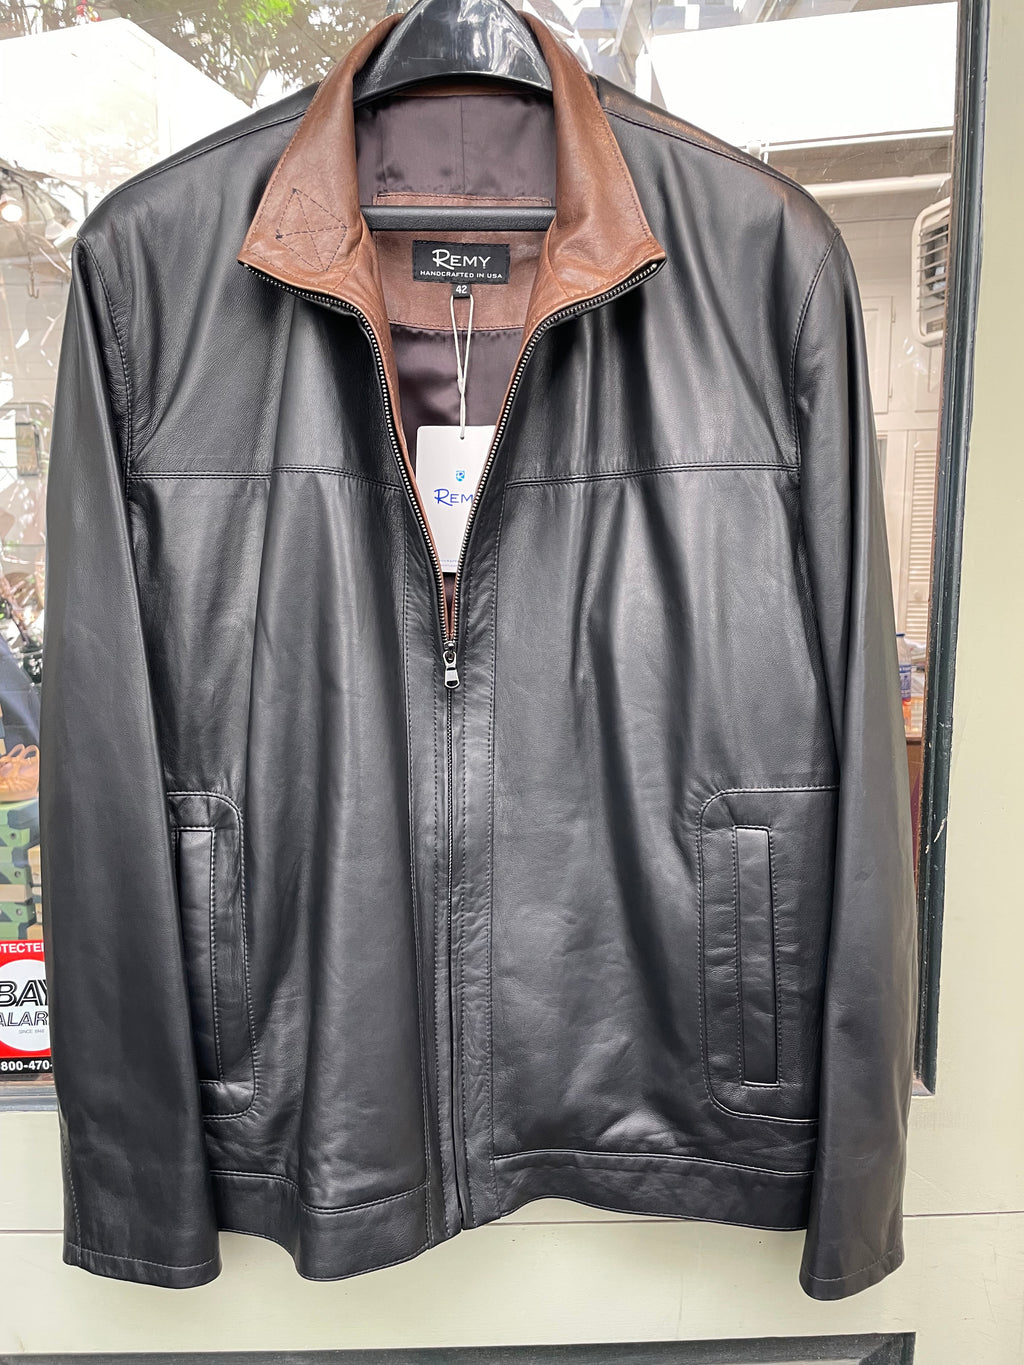 Remy Men's Black Butter-soft Italian Leather Jacket